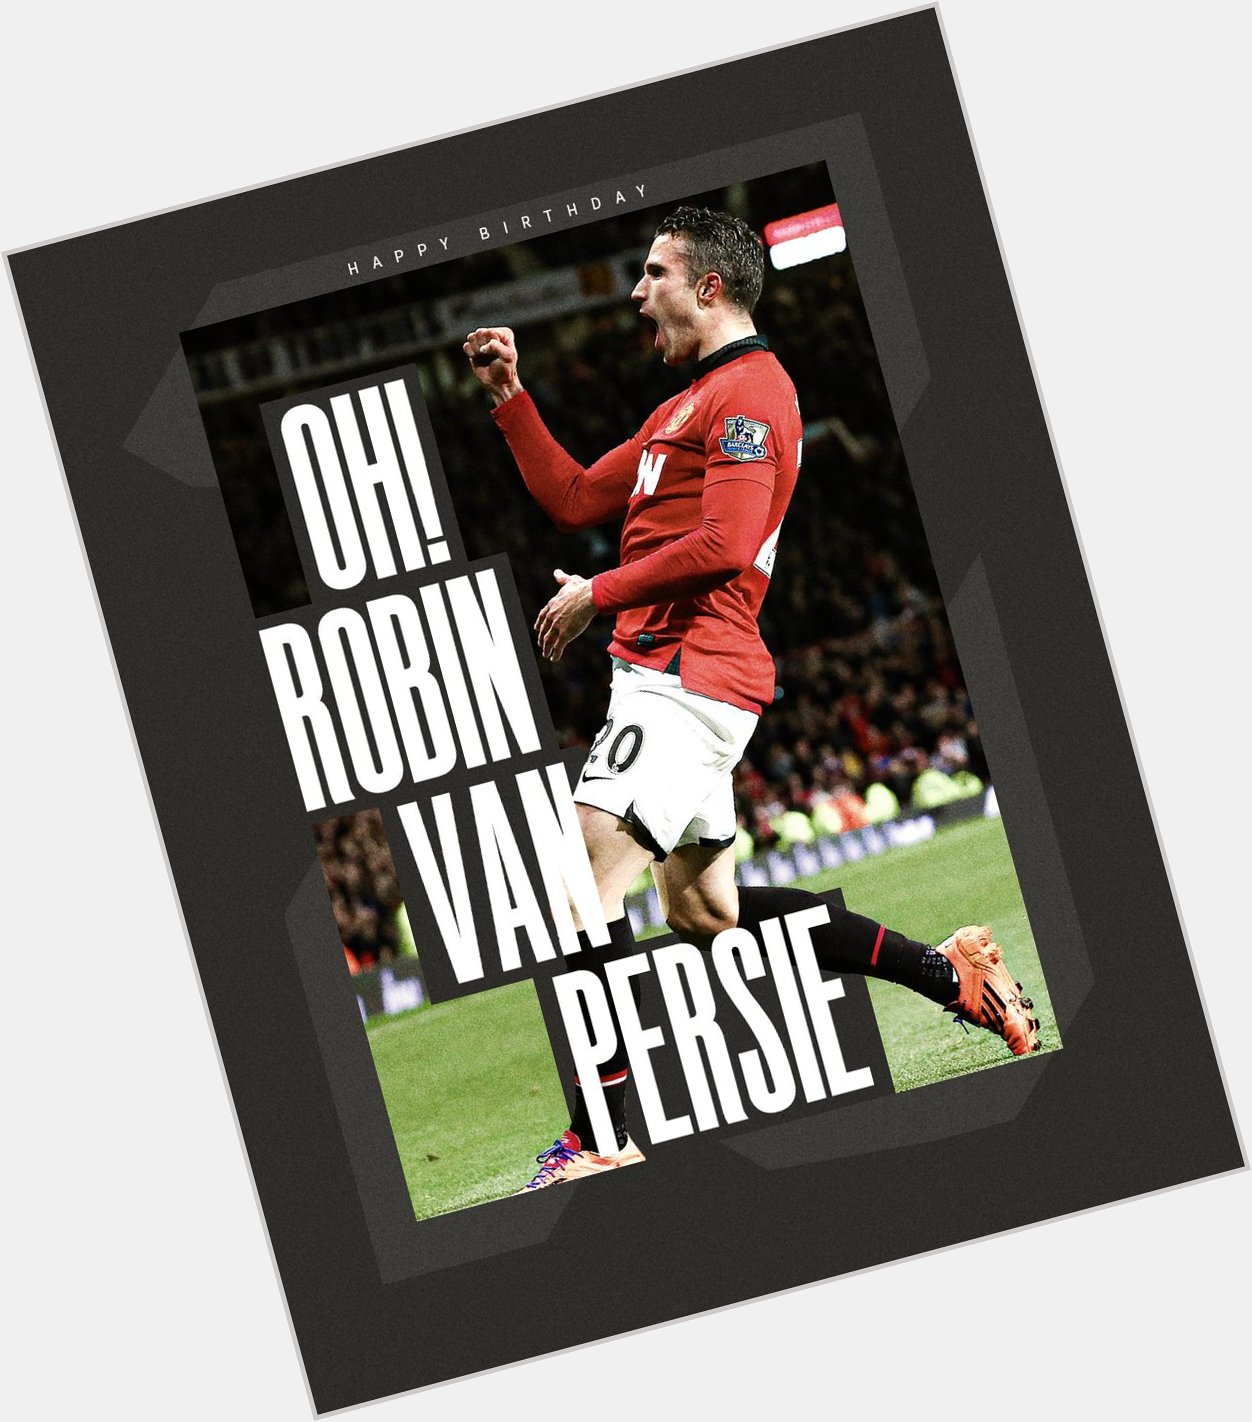 Happy birthday to Robin van persie One of my favorite players growing up. 